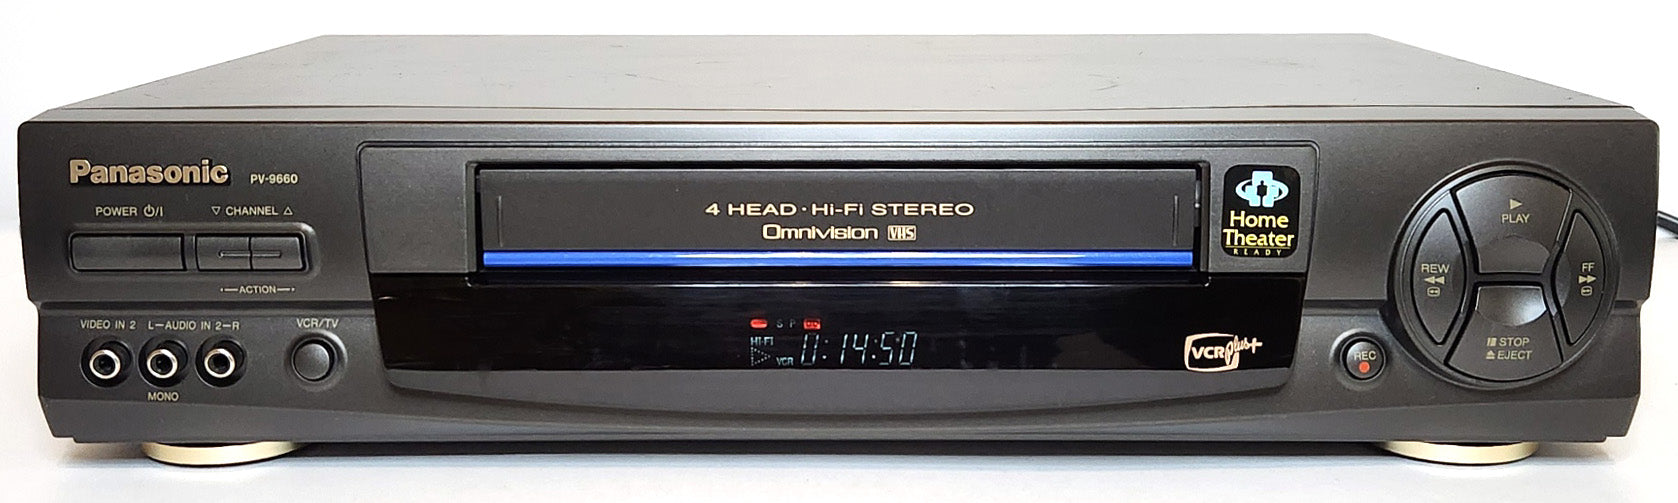 Panasonic PV-9660 Omnivision VCR, 4-Head Hi-Fi Stereo - Front